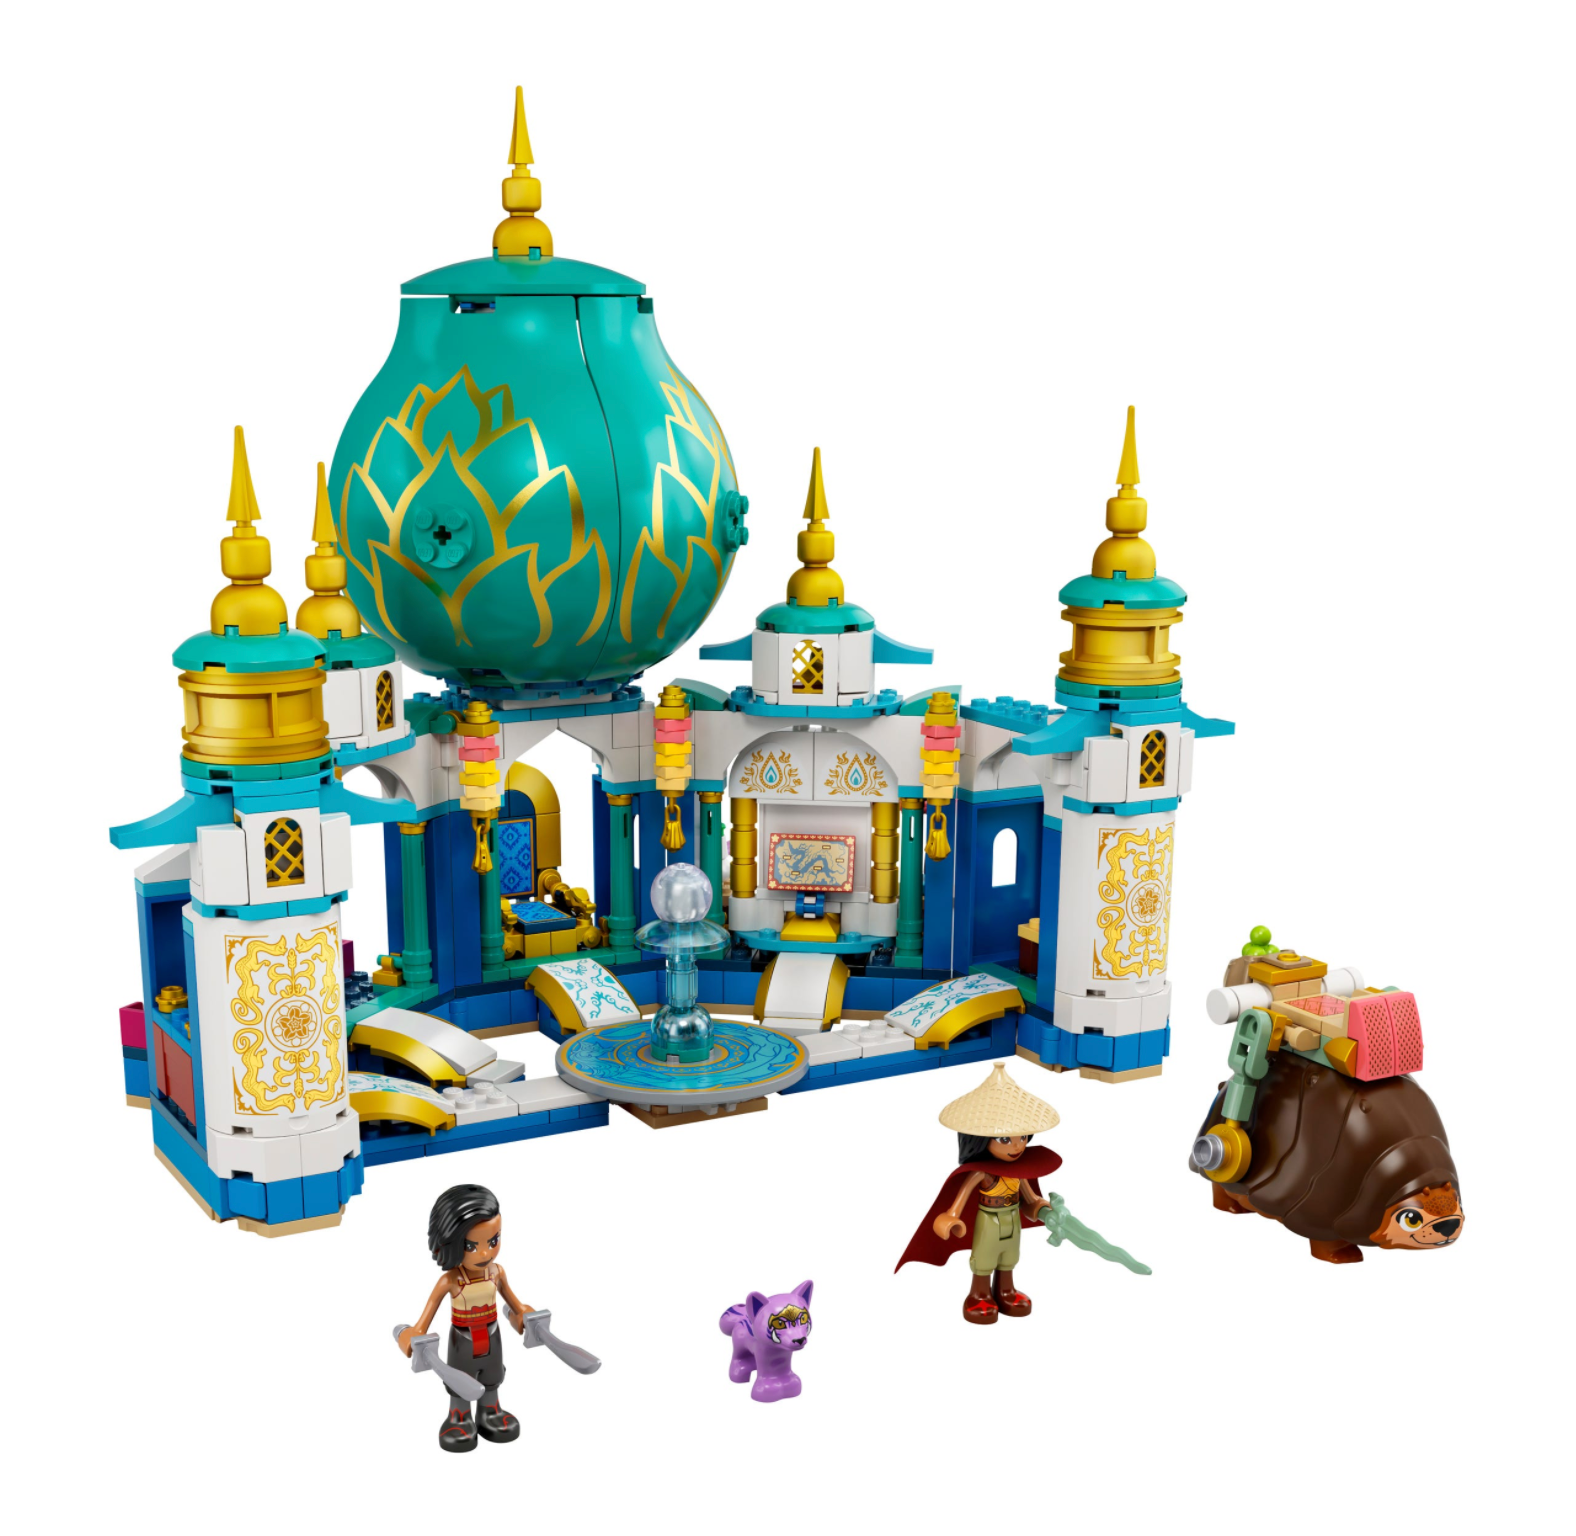 LEGO: Disney Princess - Raya and the Heart Palace